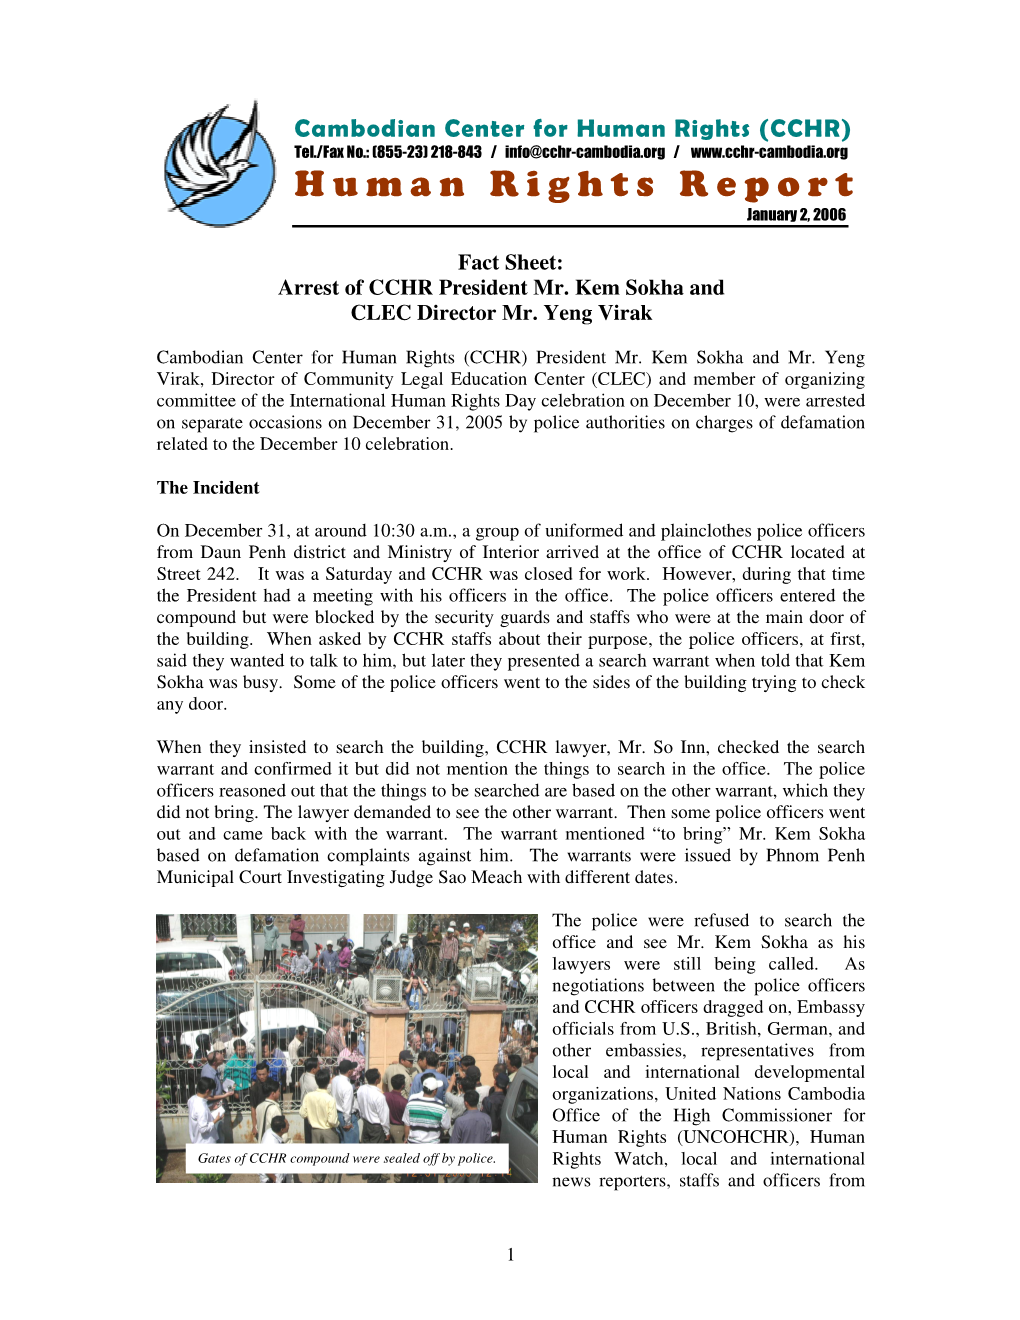 CCHR Report on the Arrests of Kem Sokha and Yeng Virak